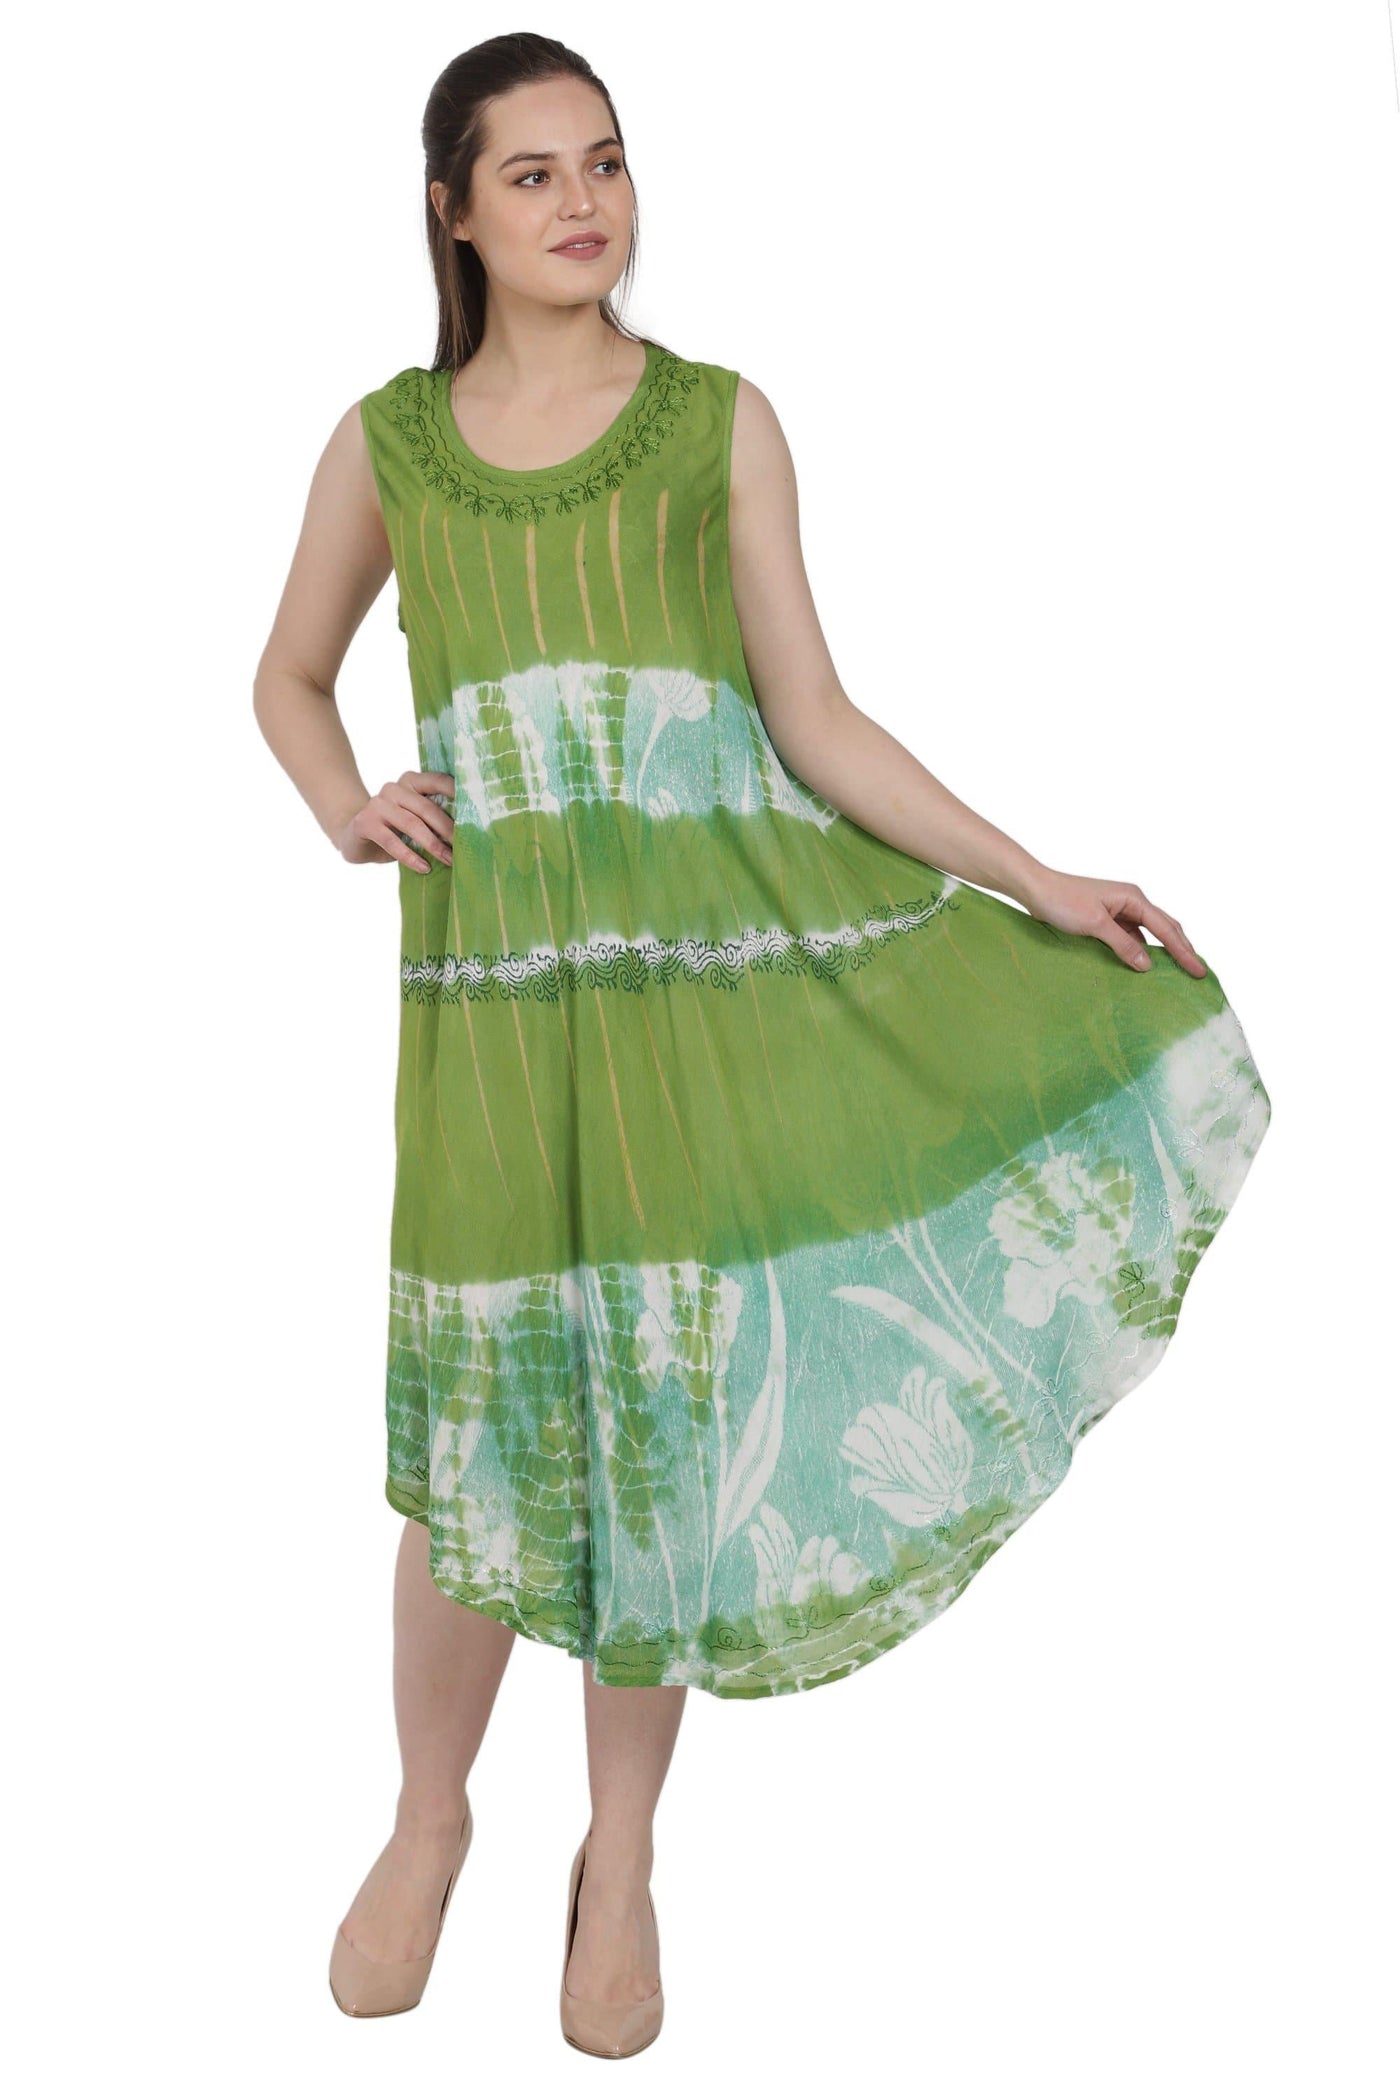 Batik Floral Tie Dye Beach Dress UD48-2308 - Advance Apparels Inc